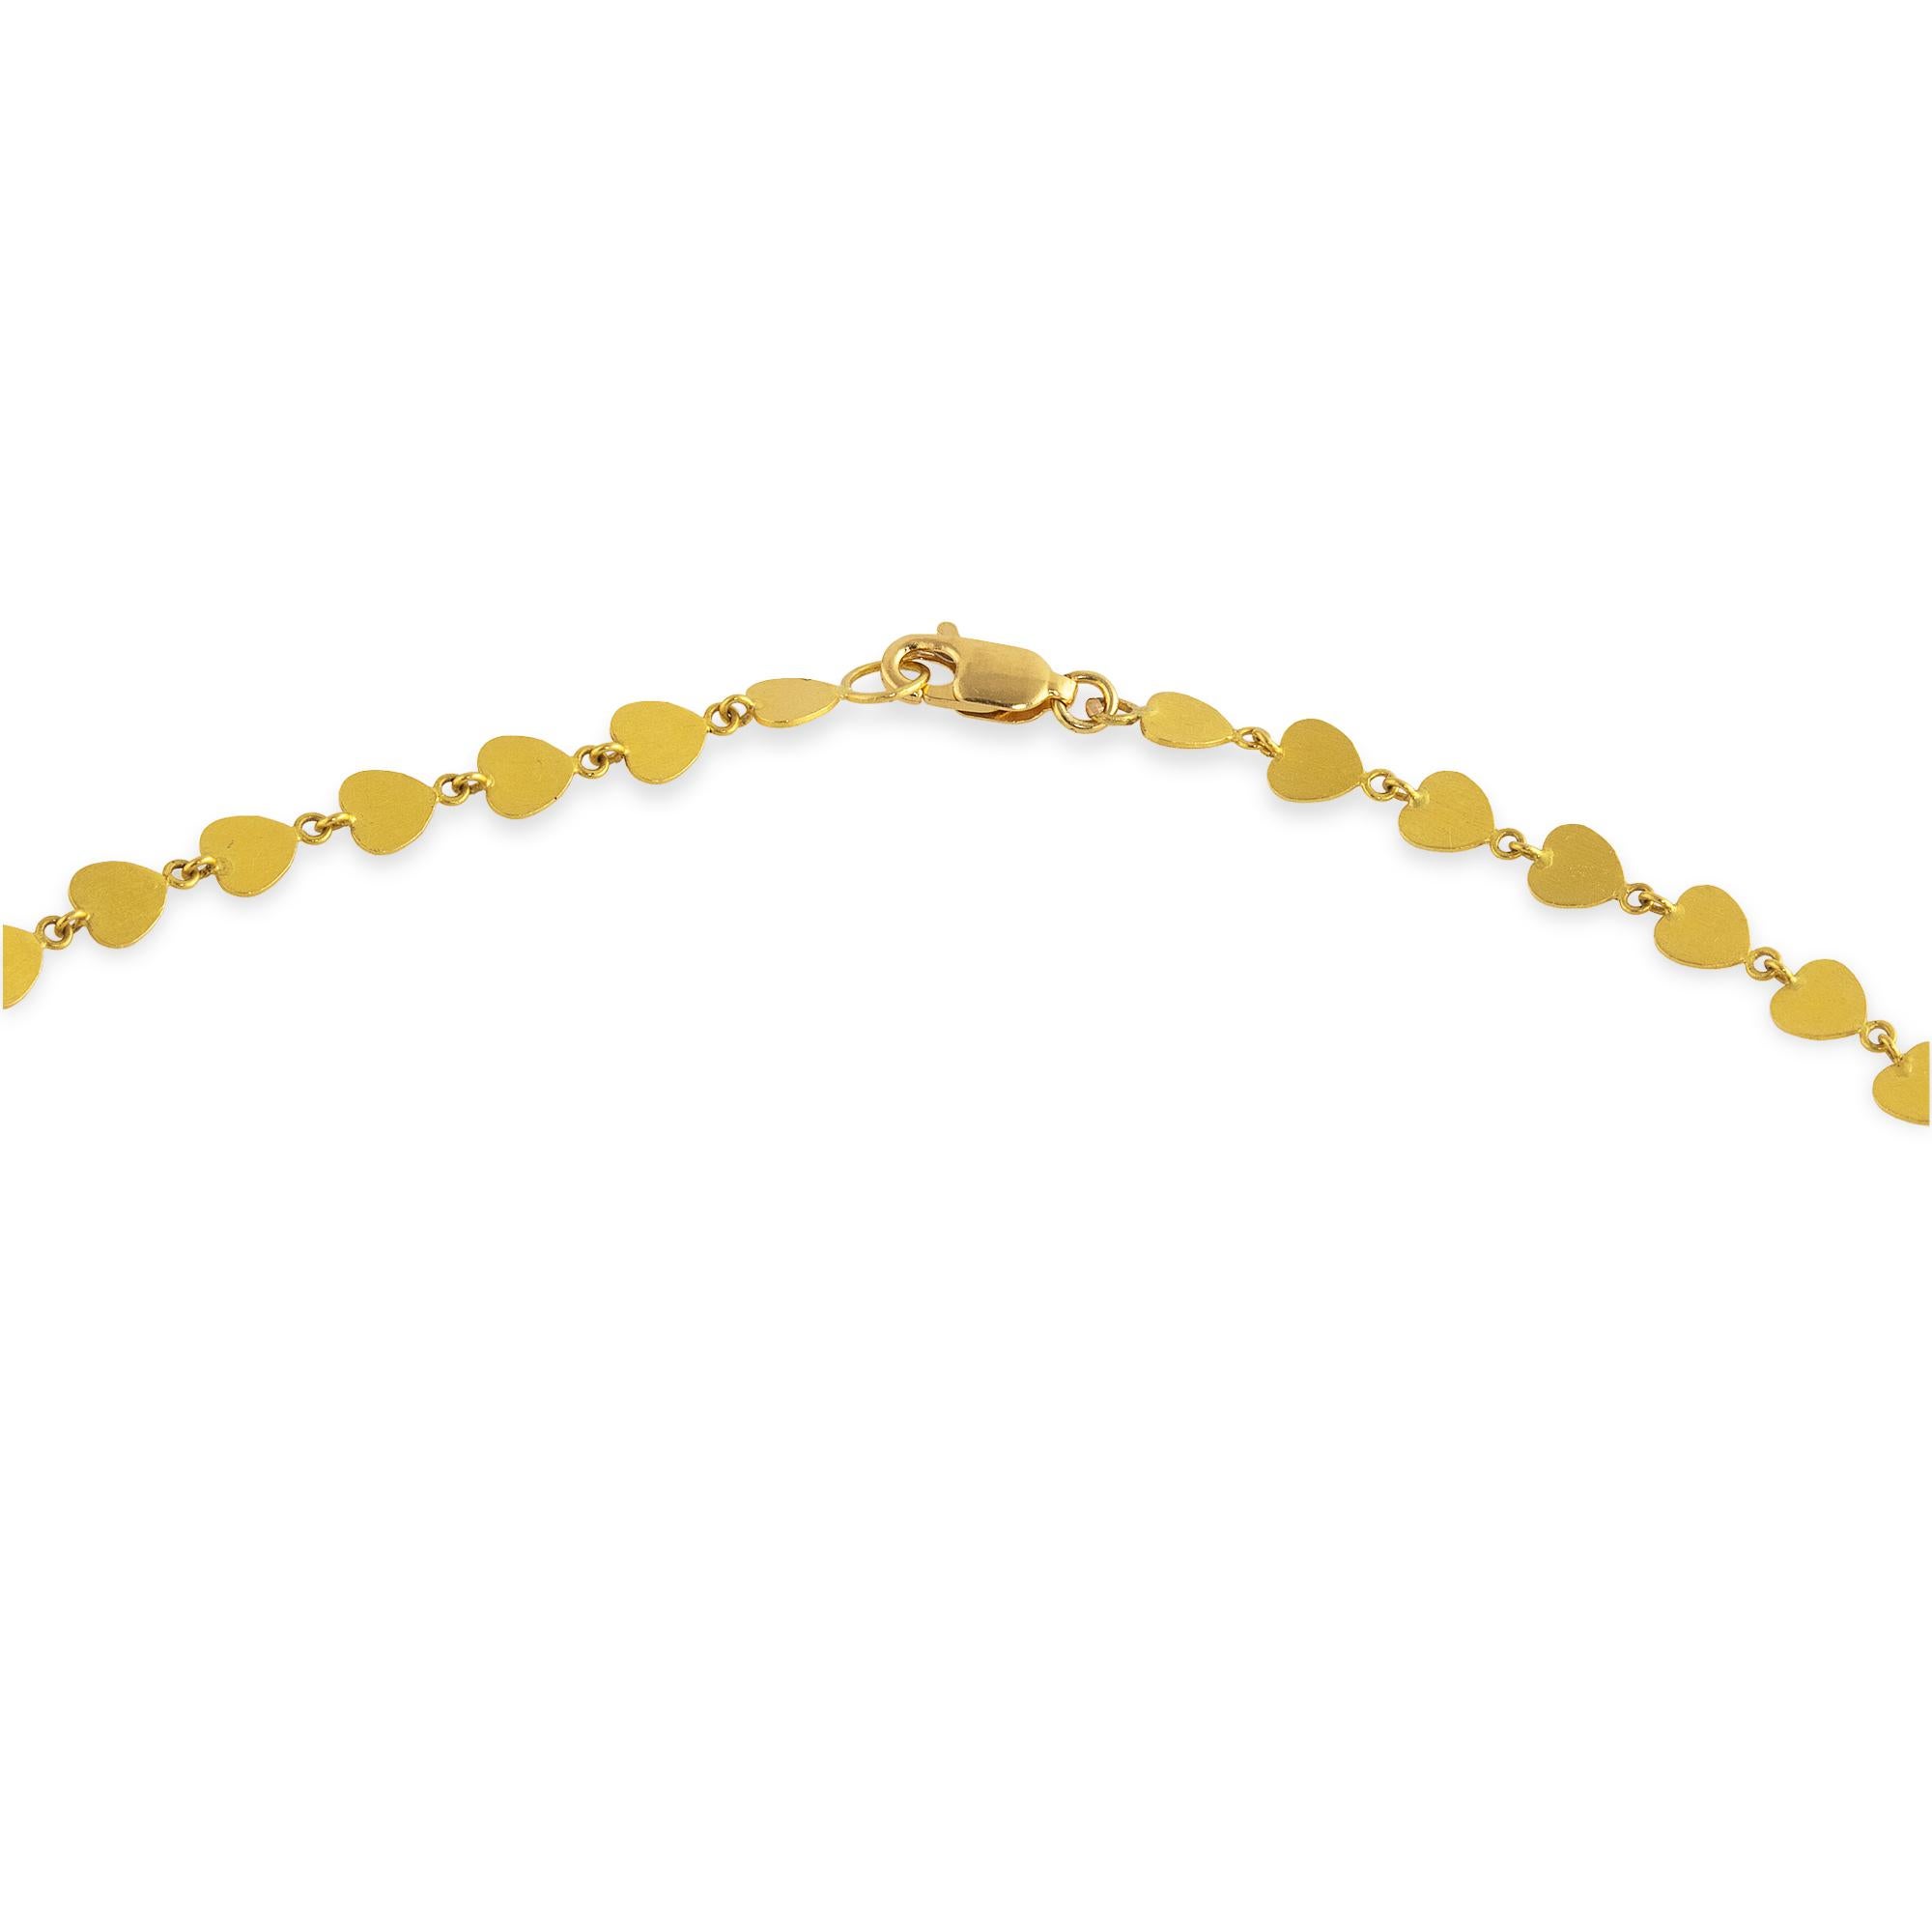 22 k gold choker necklace fine handmade jewelry